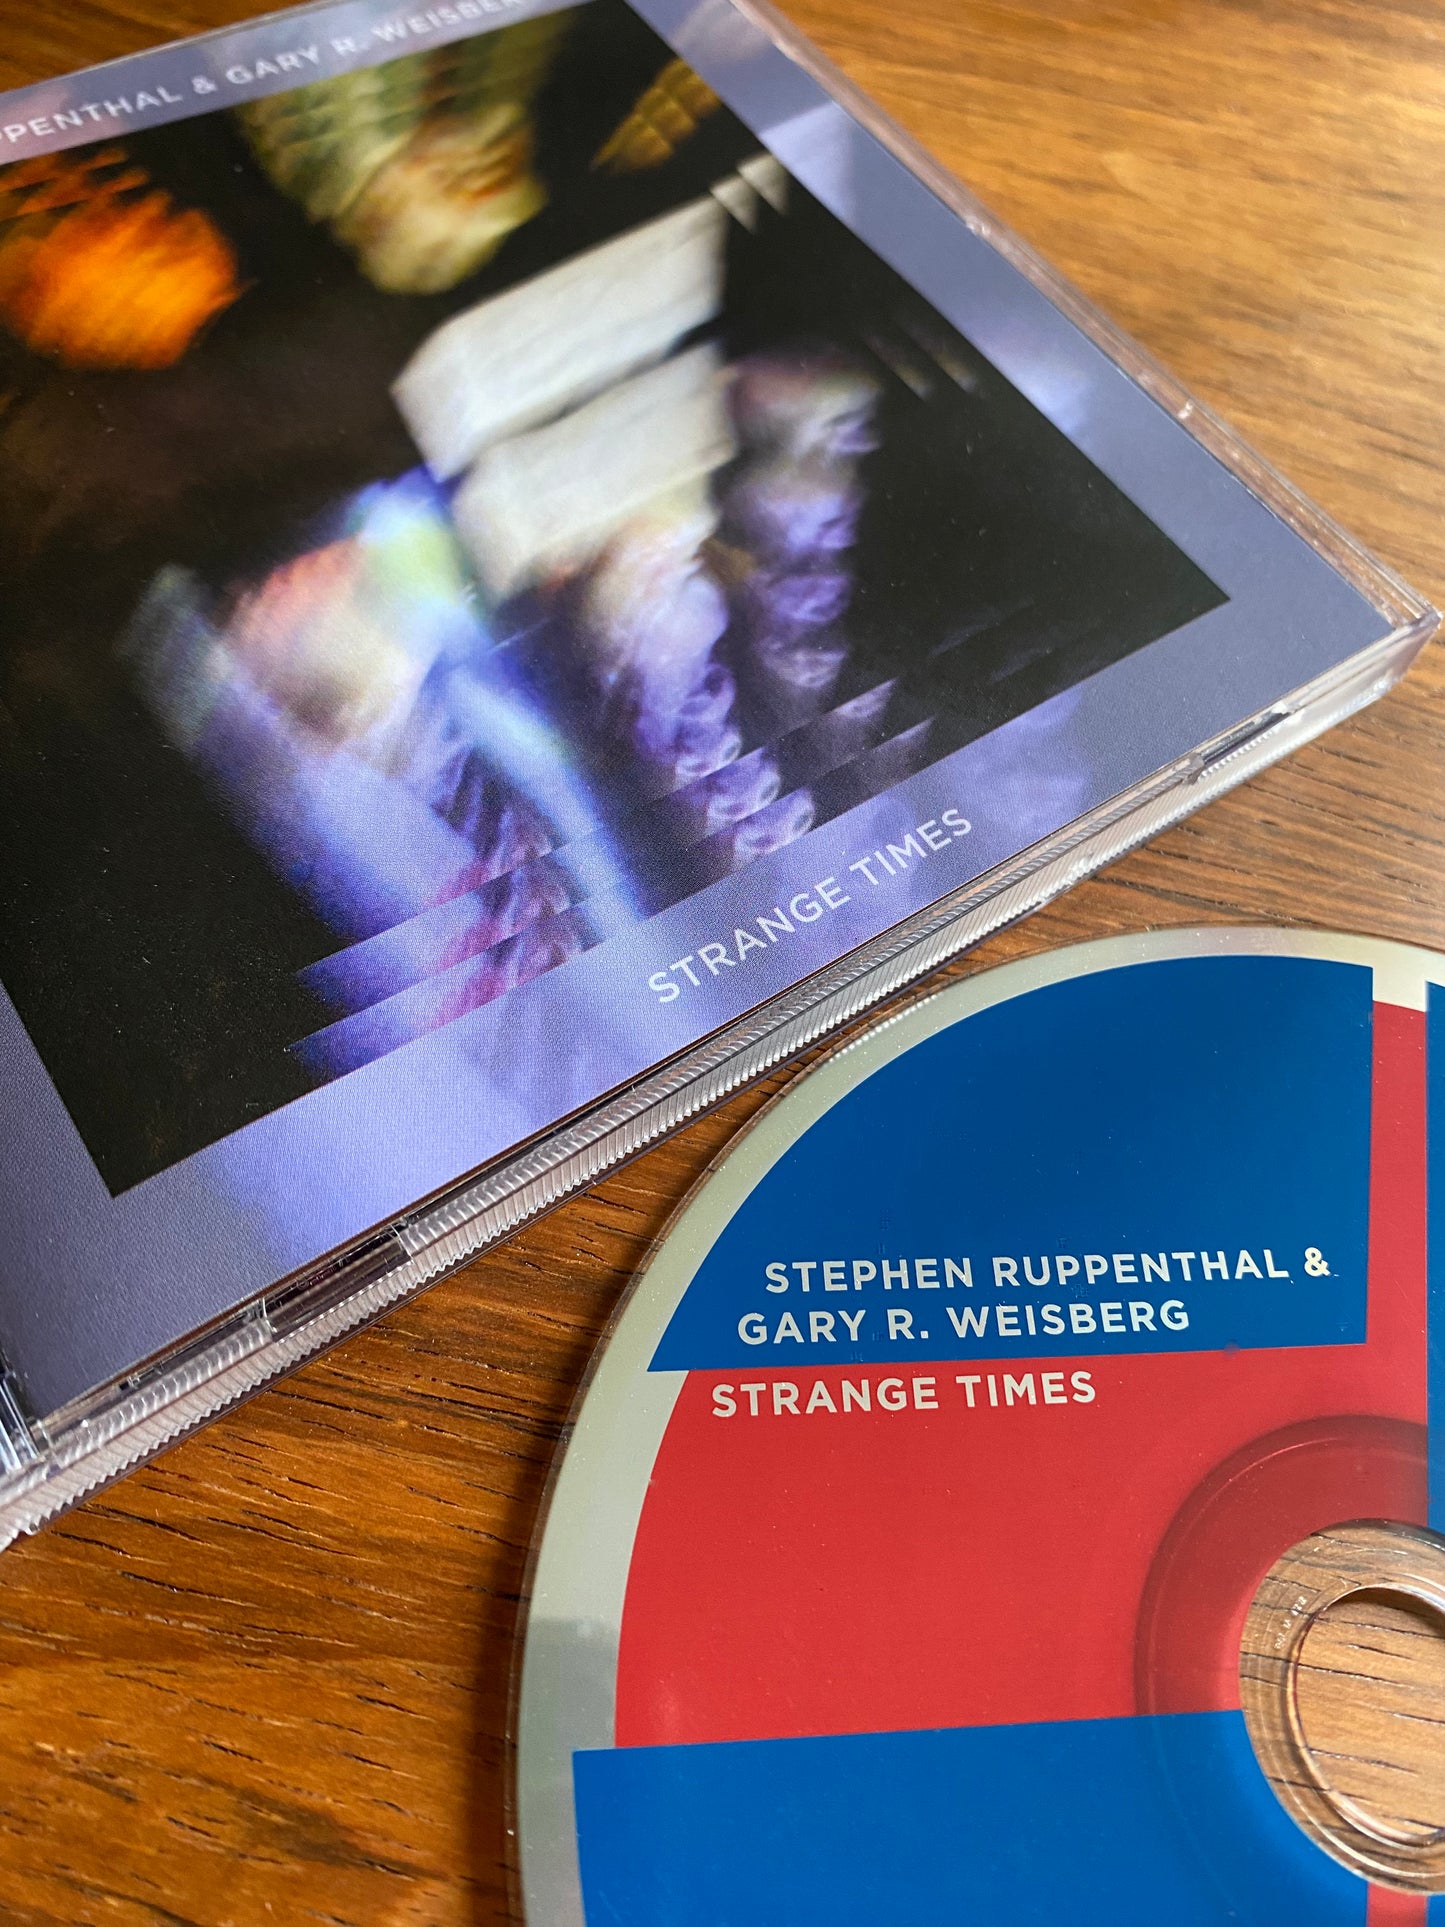 Stephen Ruppenthal & Gary R. Weisberg - Strange Times - CD